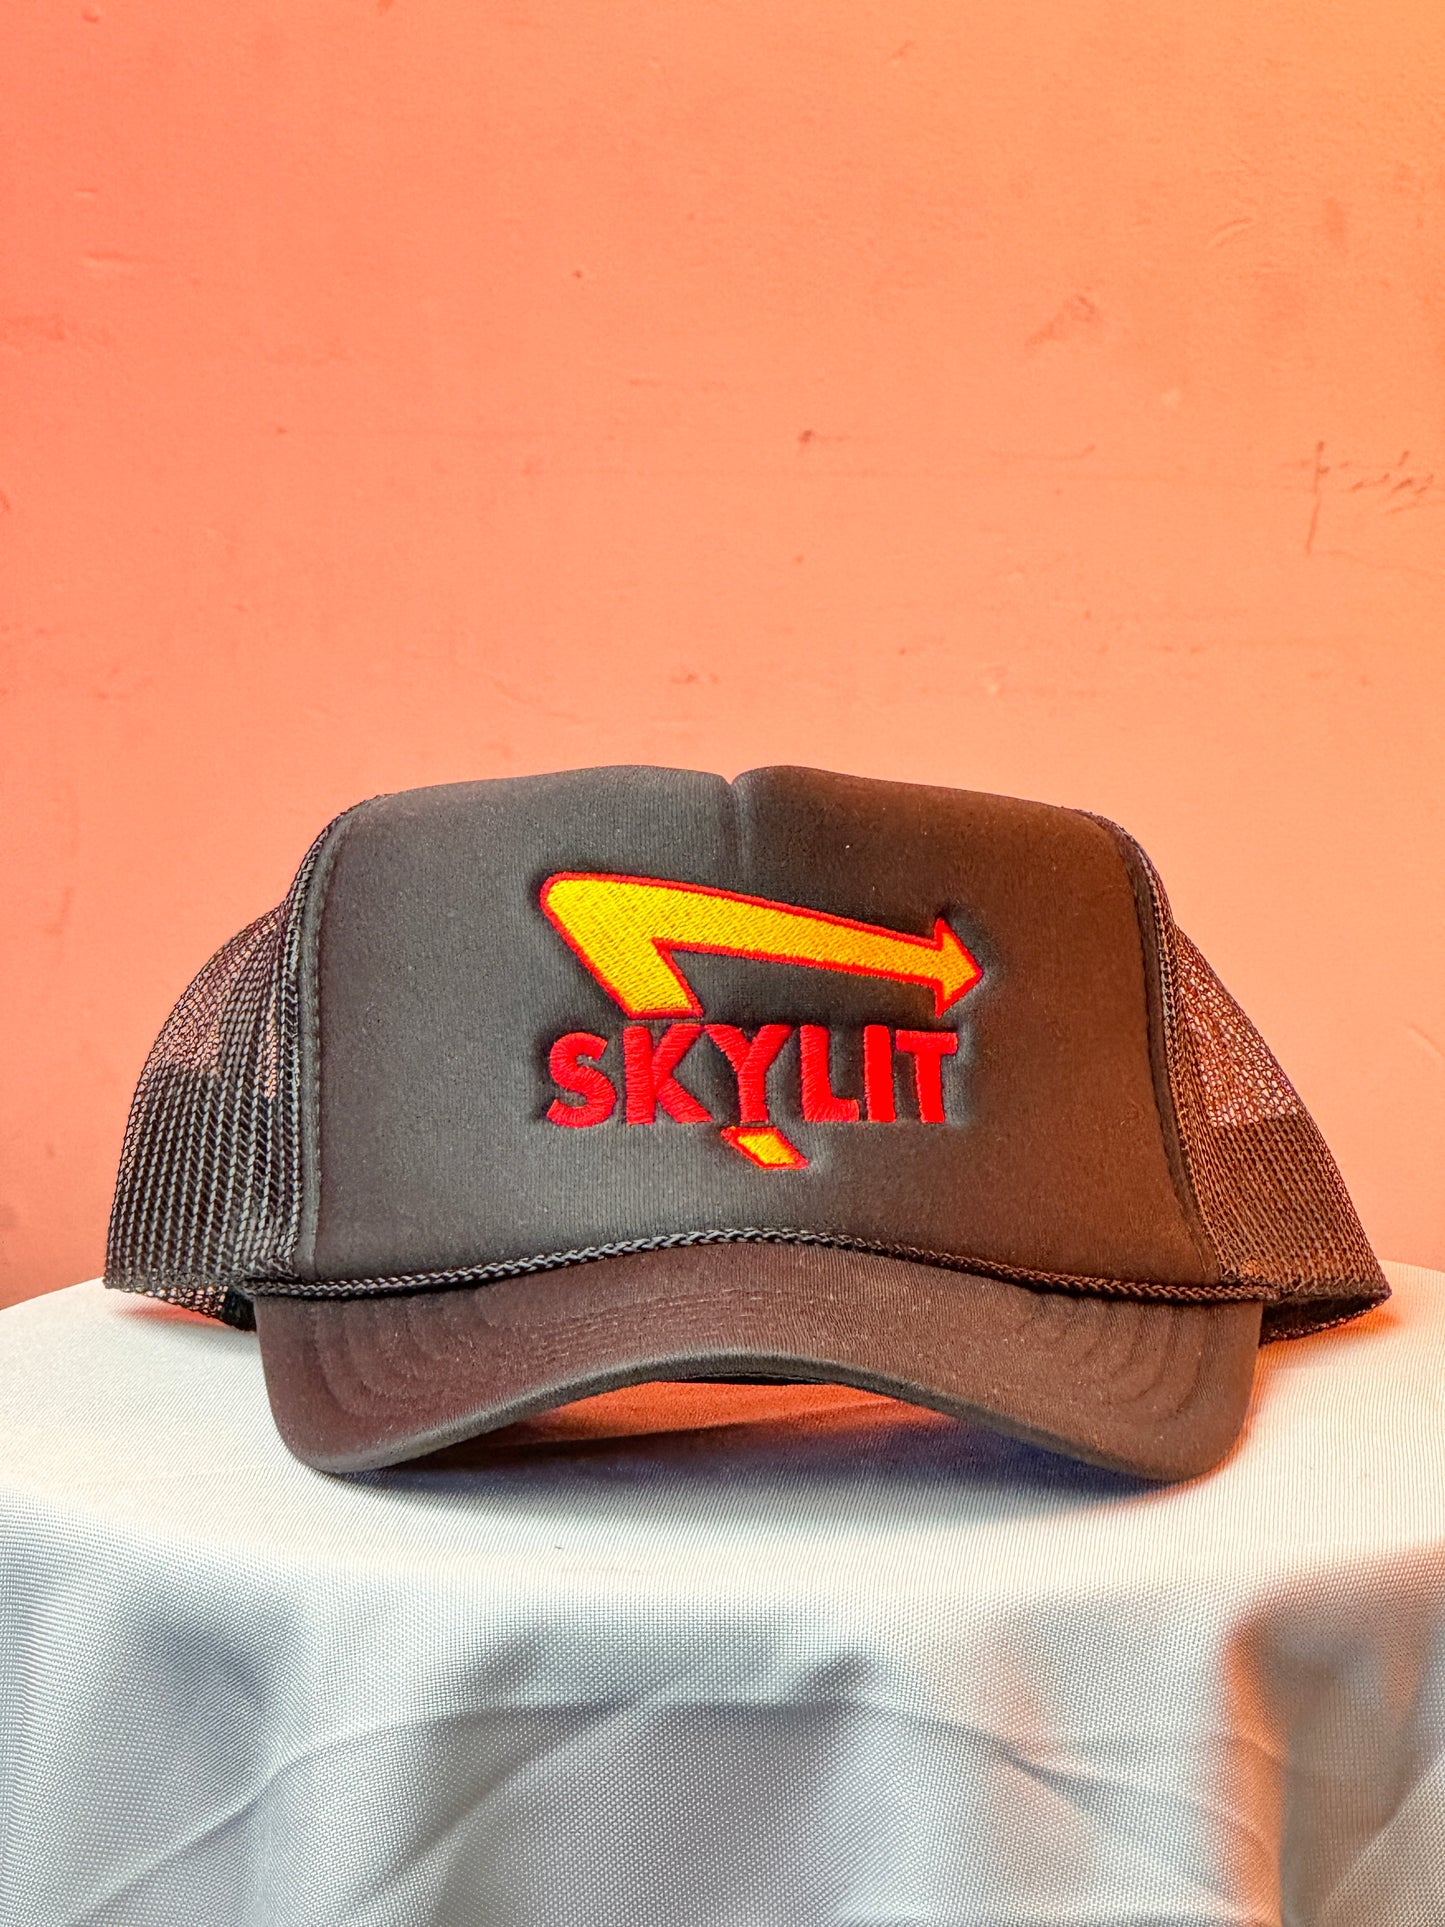 Skylit Burger Employee Hat